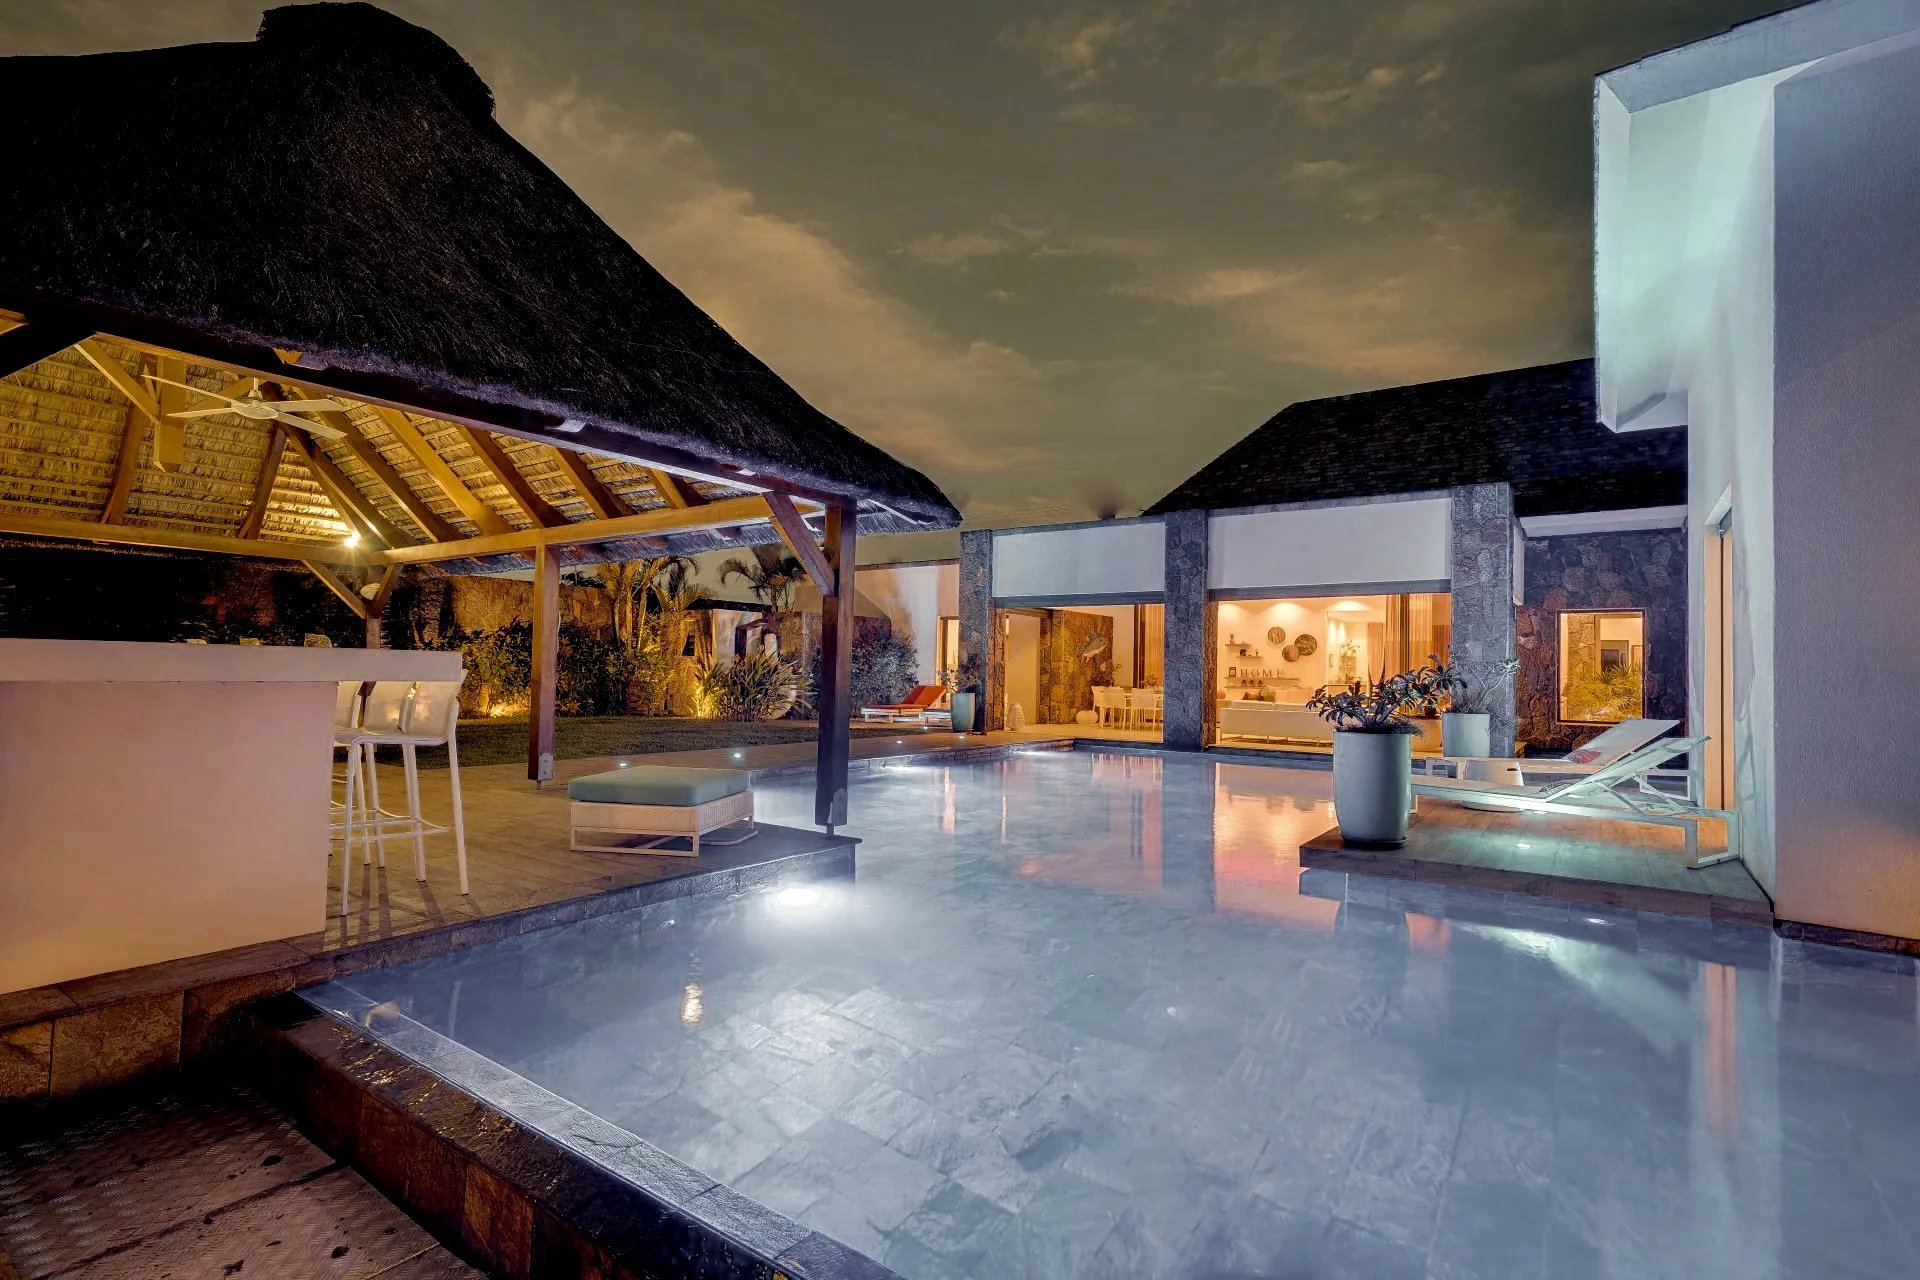 CAP MALHEUREUX - Luxurious villa close to the lagoon - 4 bedrooms